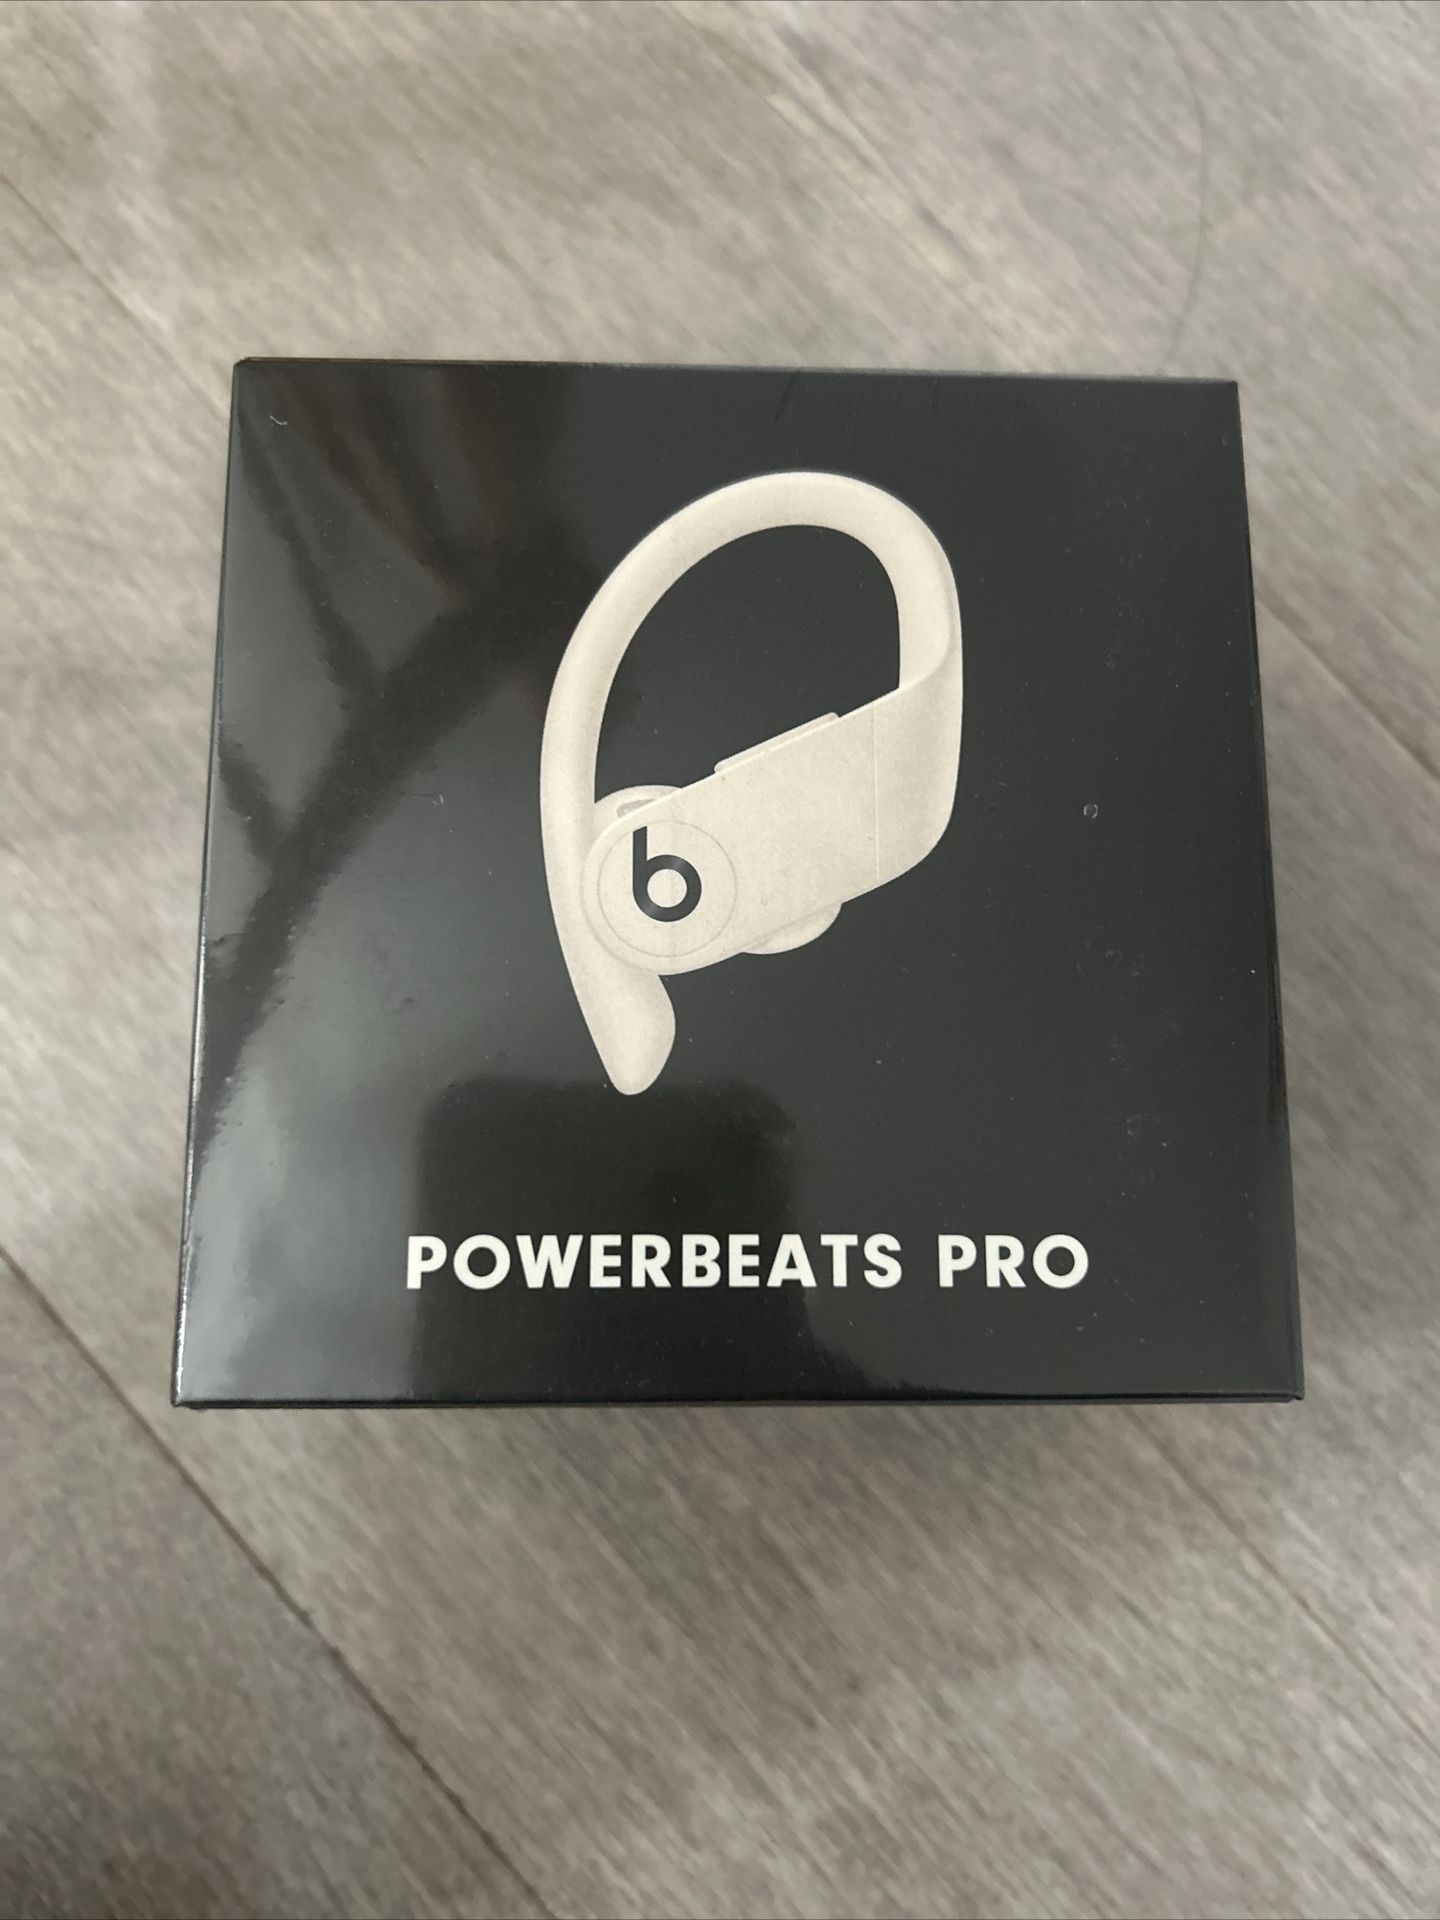 New In Box White Powerbeats pro